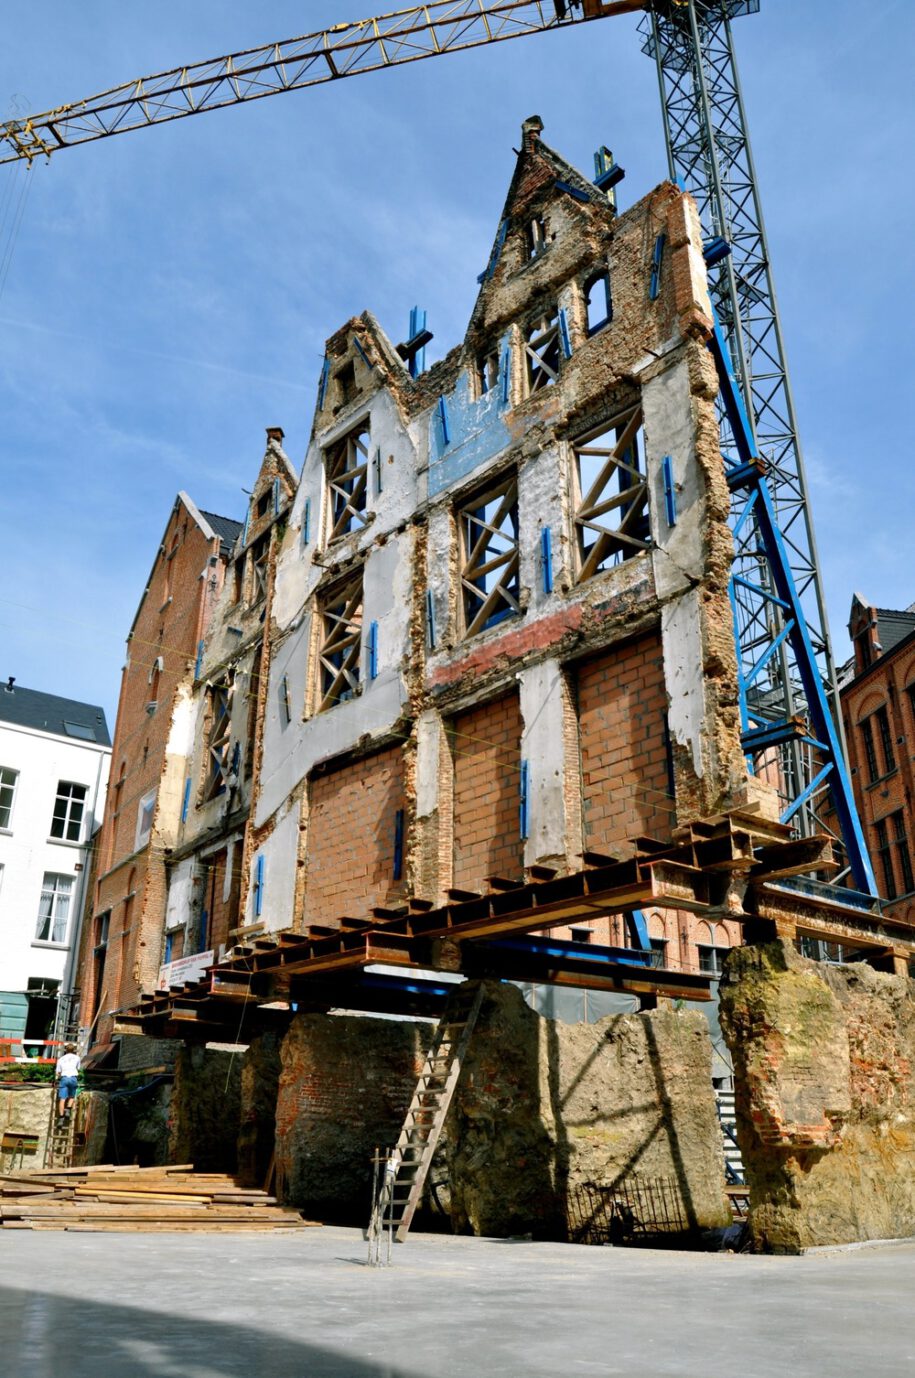 Archisearch Drabstraat Apartments: interweaving of history in Mechelen, Belgium by dmvA